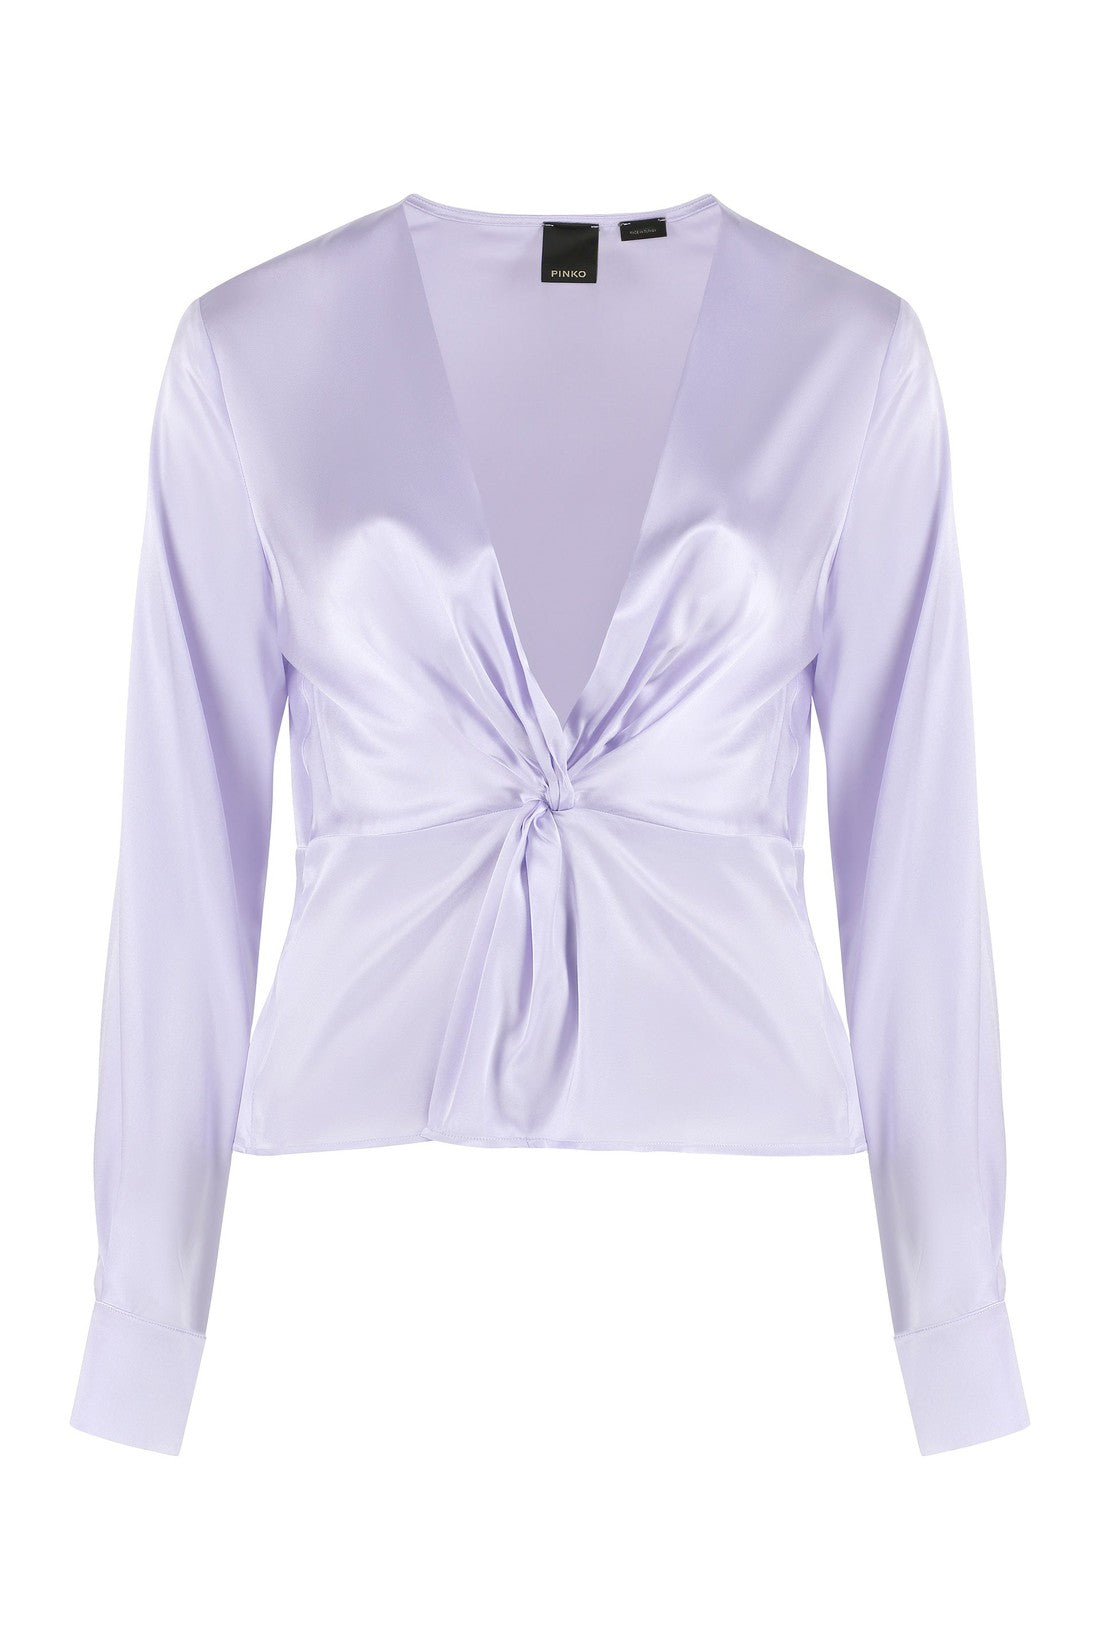 Pinko-OUTLET-SALE-Baradero silk blouse-ARCHIVIST